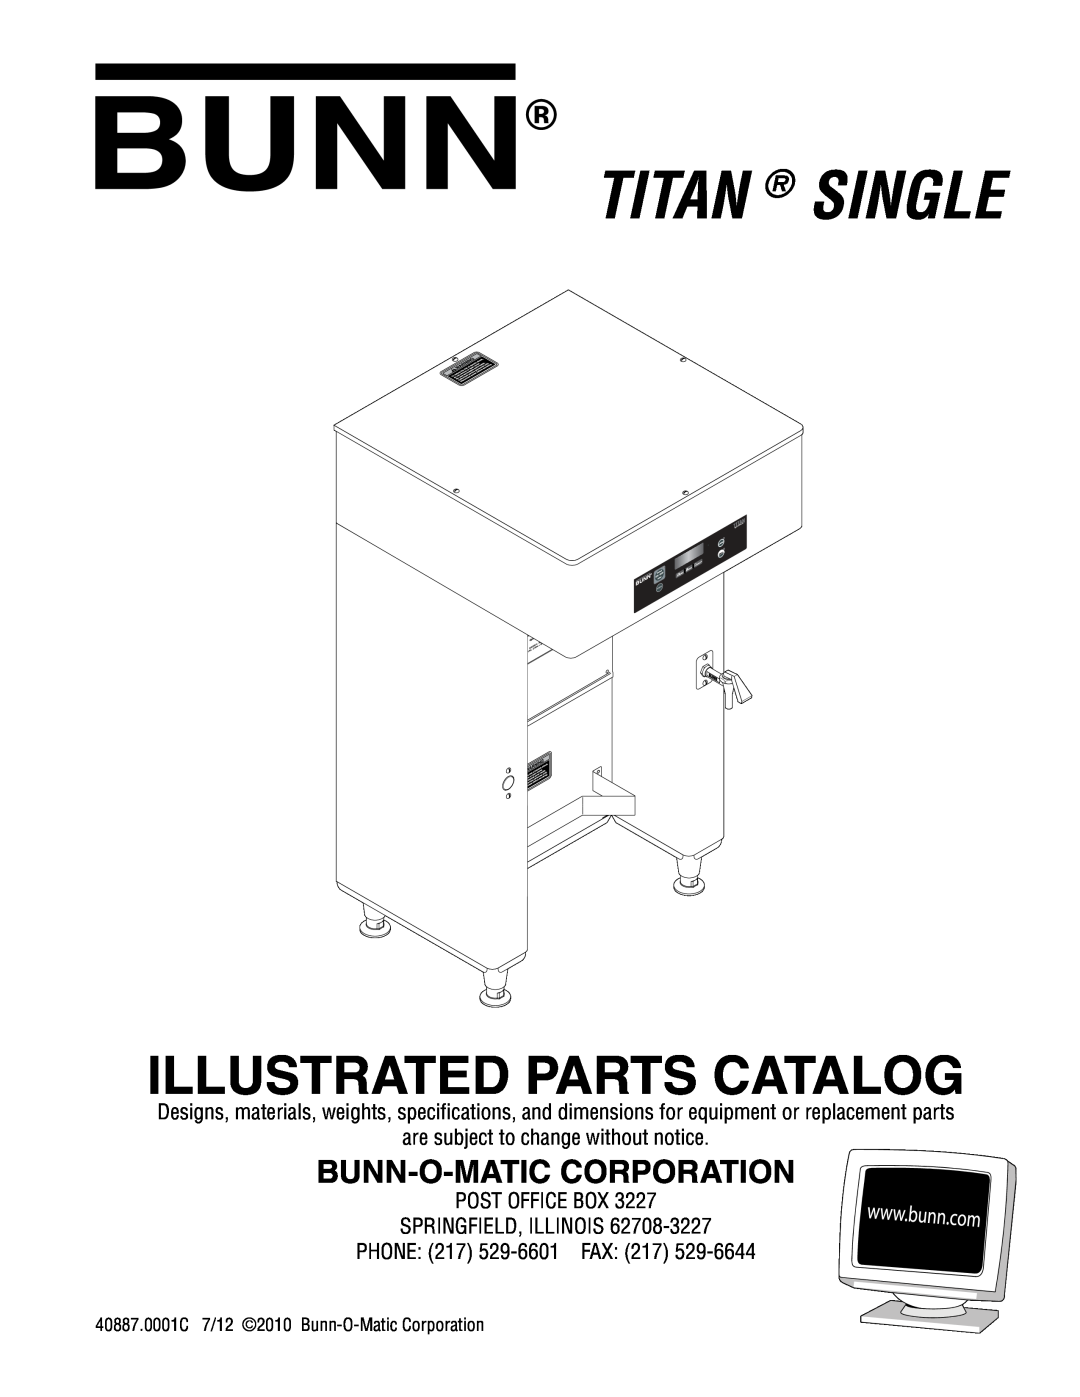 Bunn manual ULTRA-2, Installation & Operating Manual, Bunn-O-Matic Corporation, Post Office Box Springfield, Illinois 